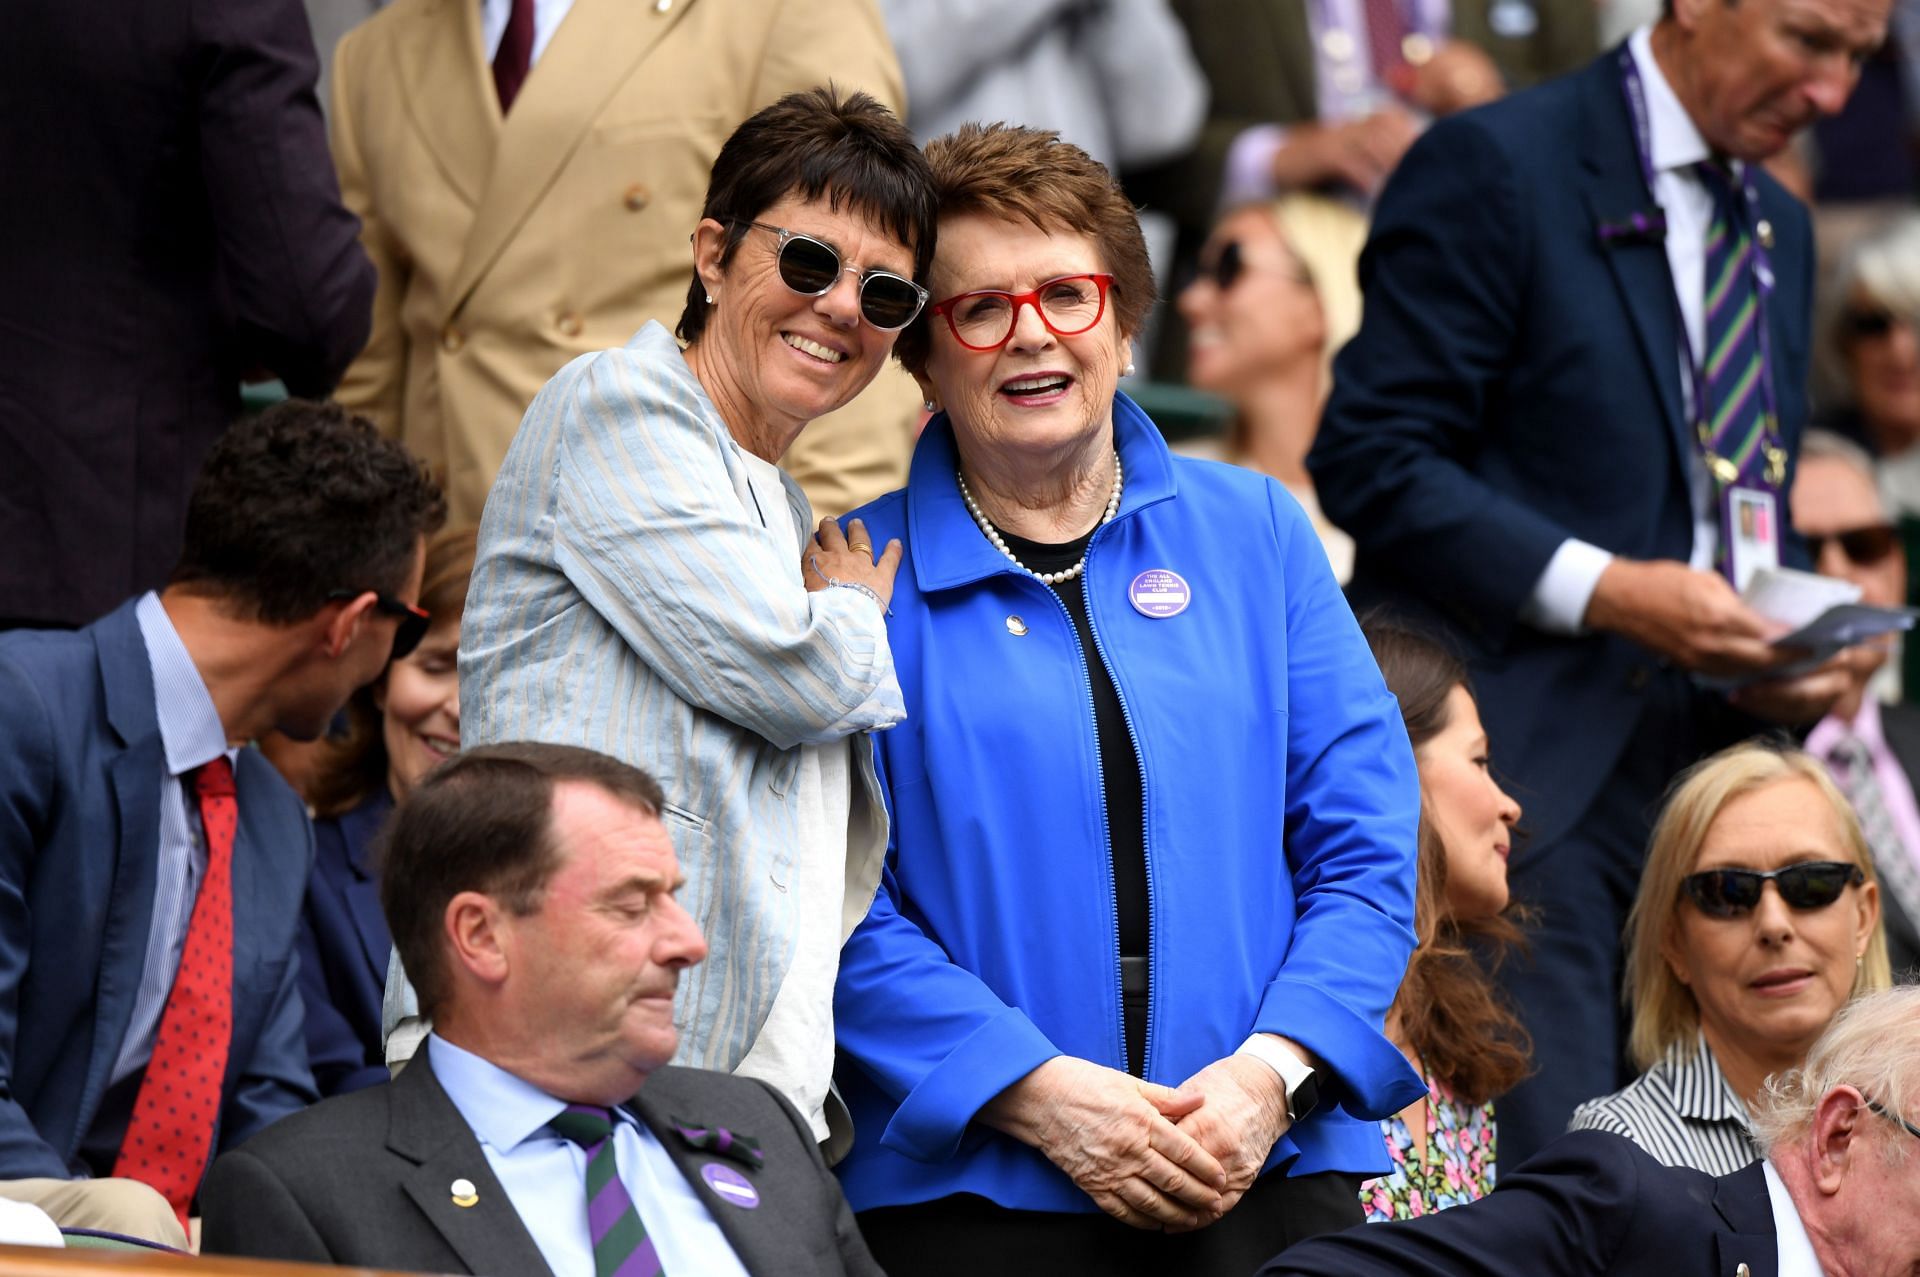 Ilana Kloss and Billie Jean King at the 2019 Wimbledon